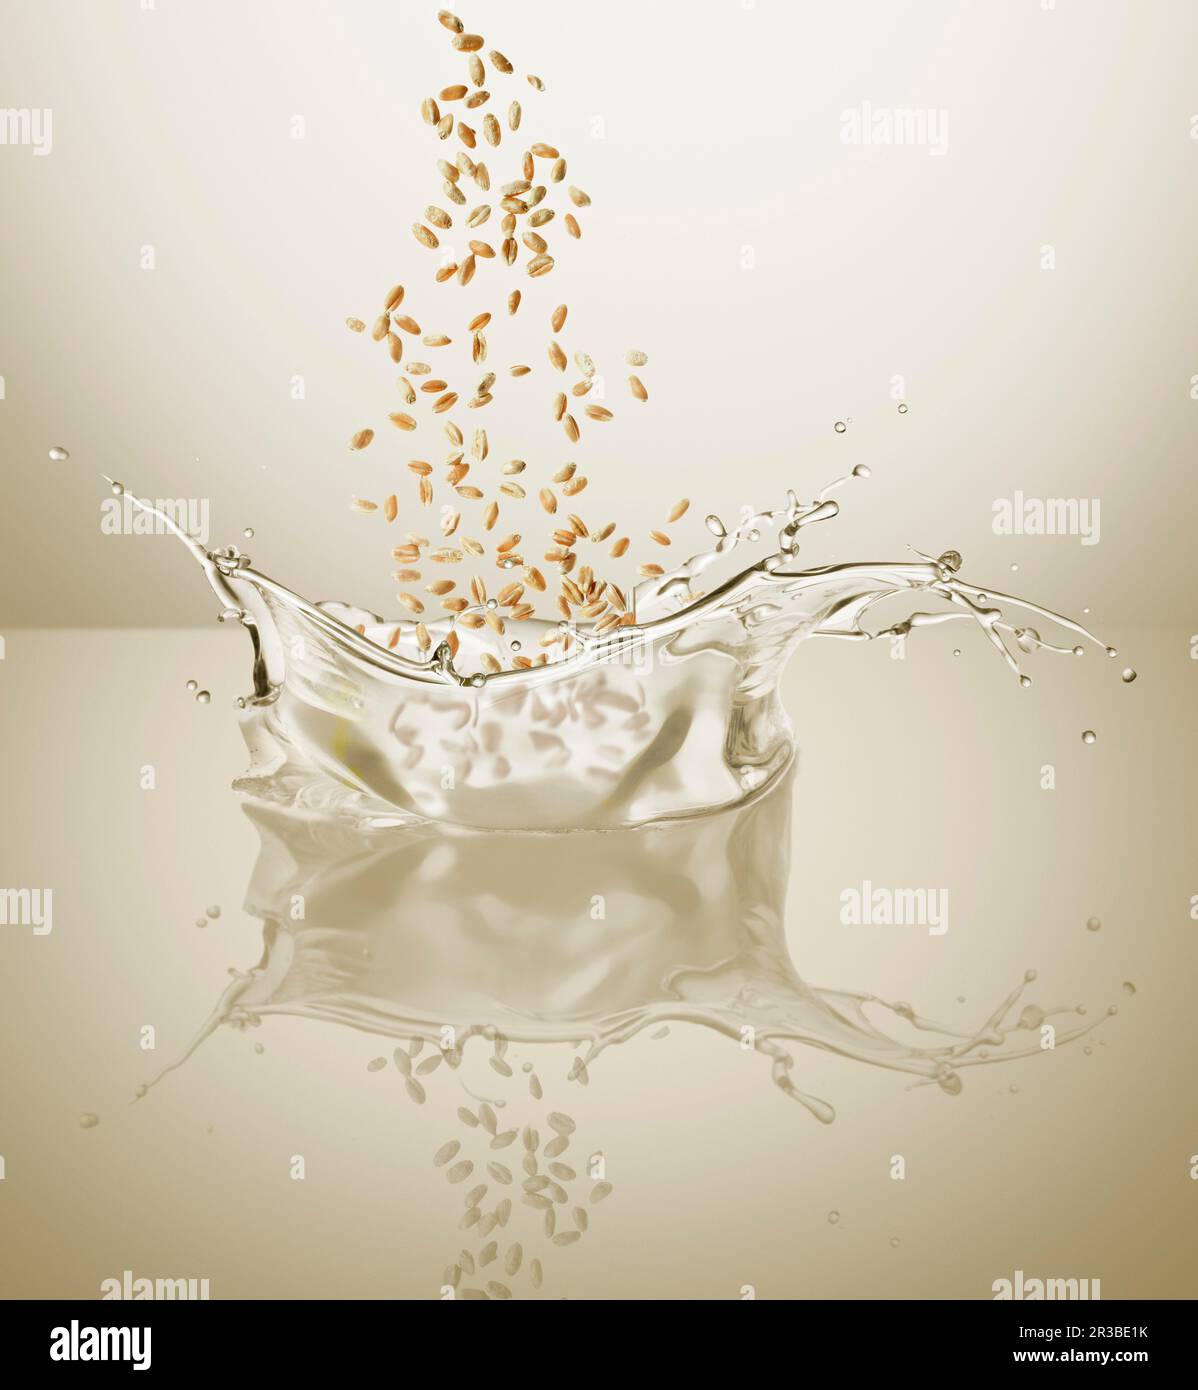 A splash of wheat germ oil Stock Photo